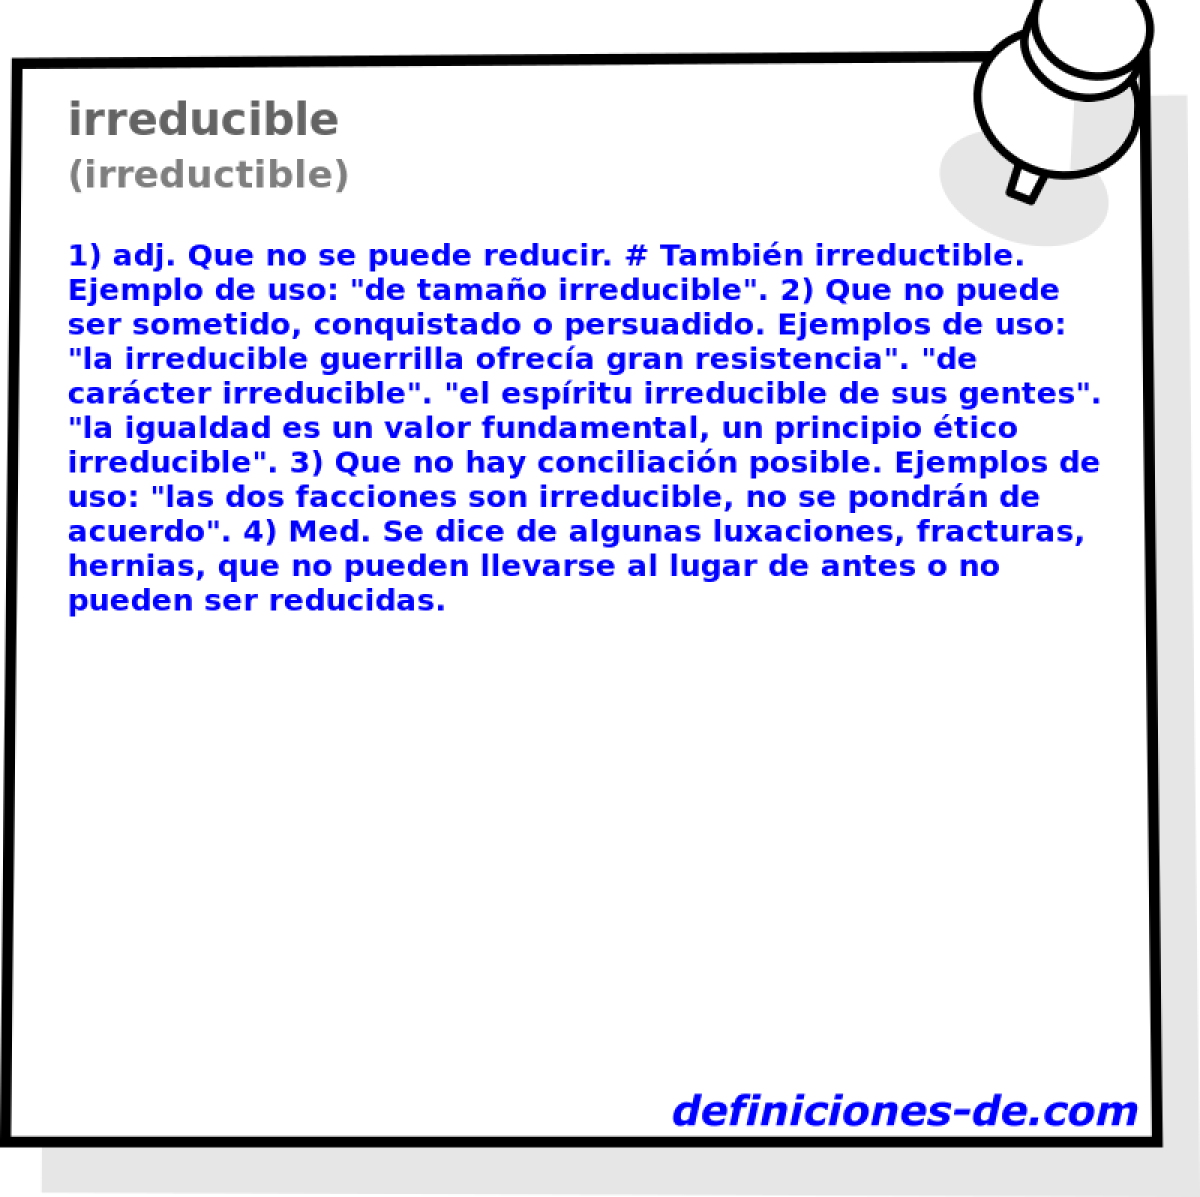 irreducible (irreductible)